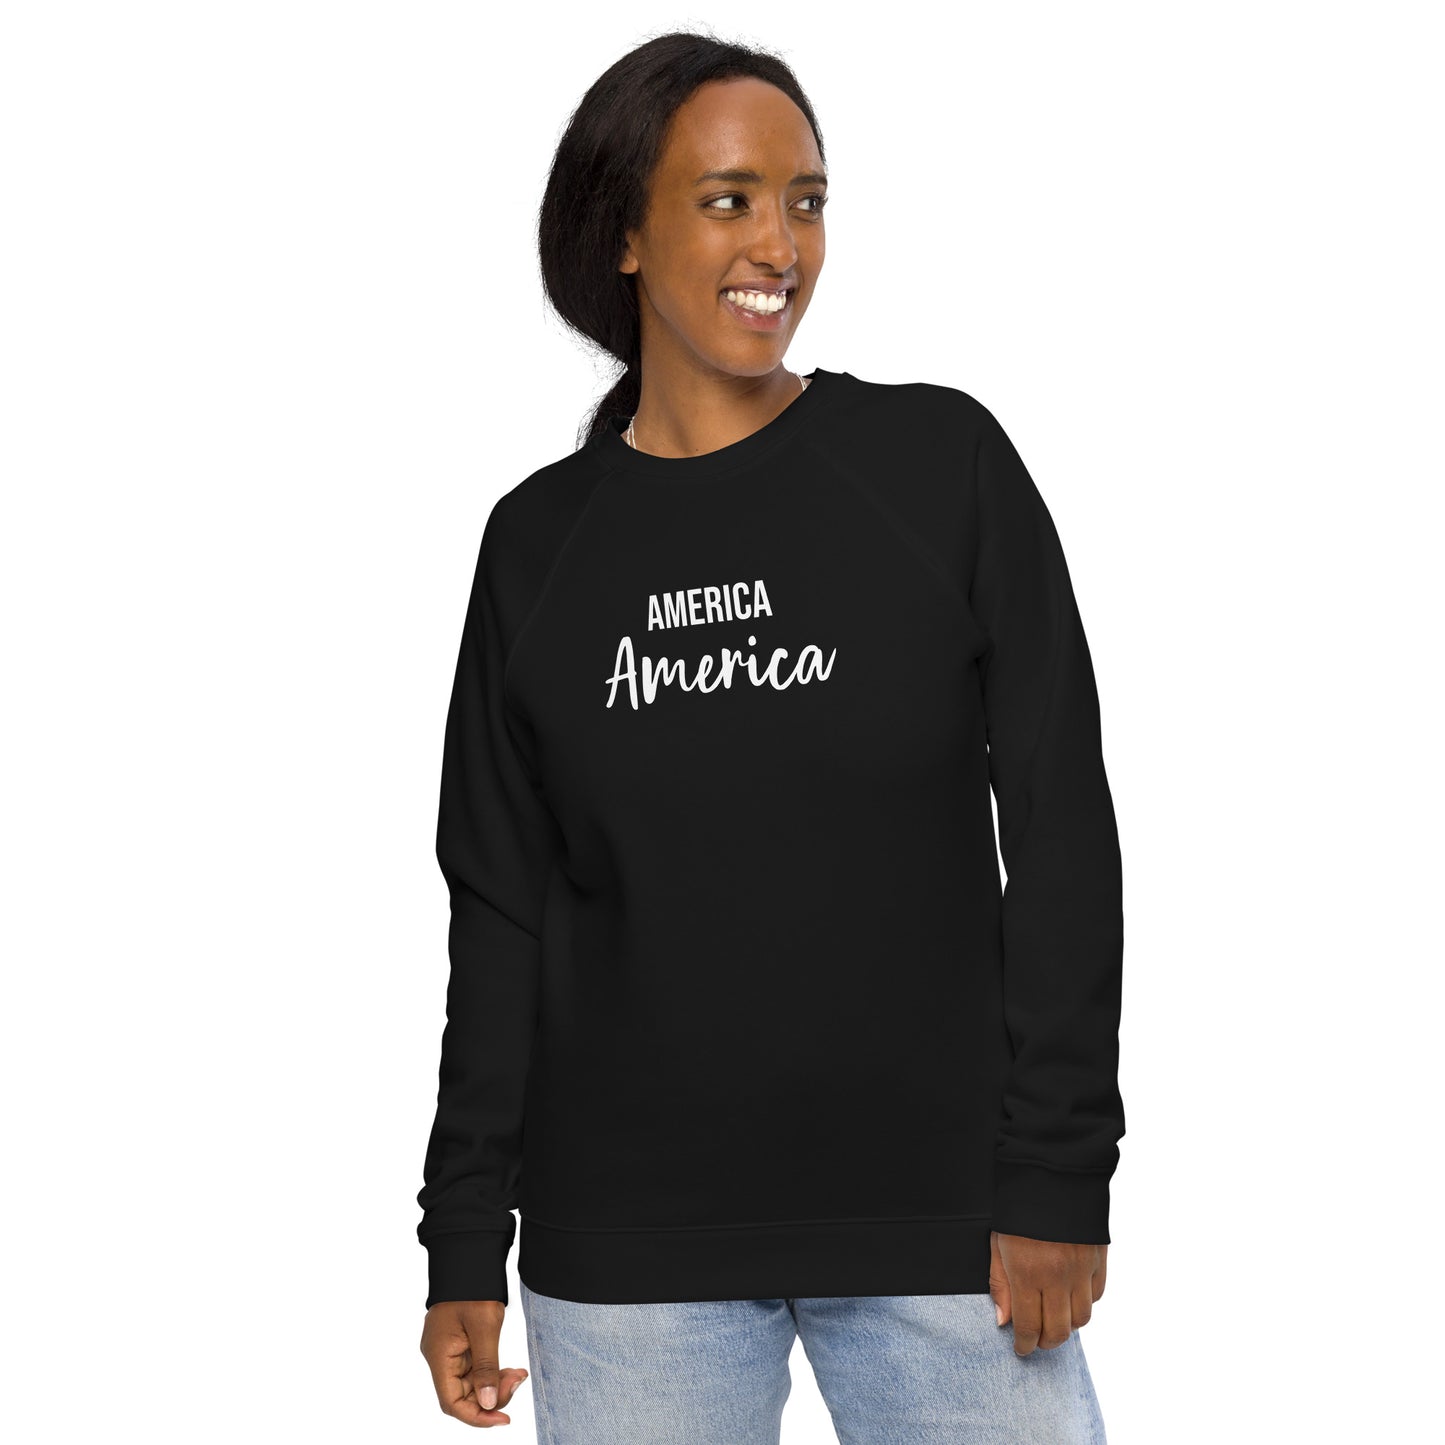 America America Unisex Bio-Raglan-Pullover